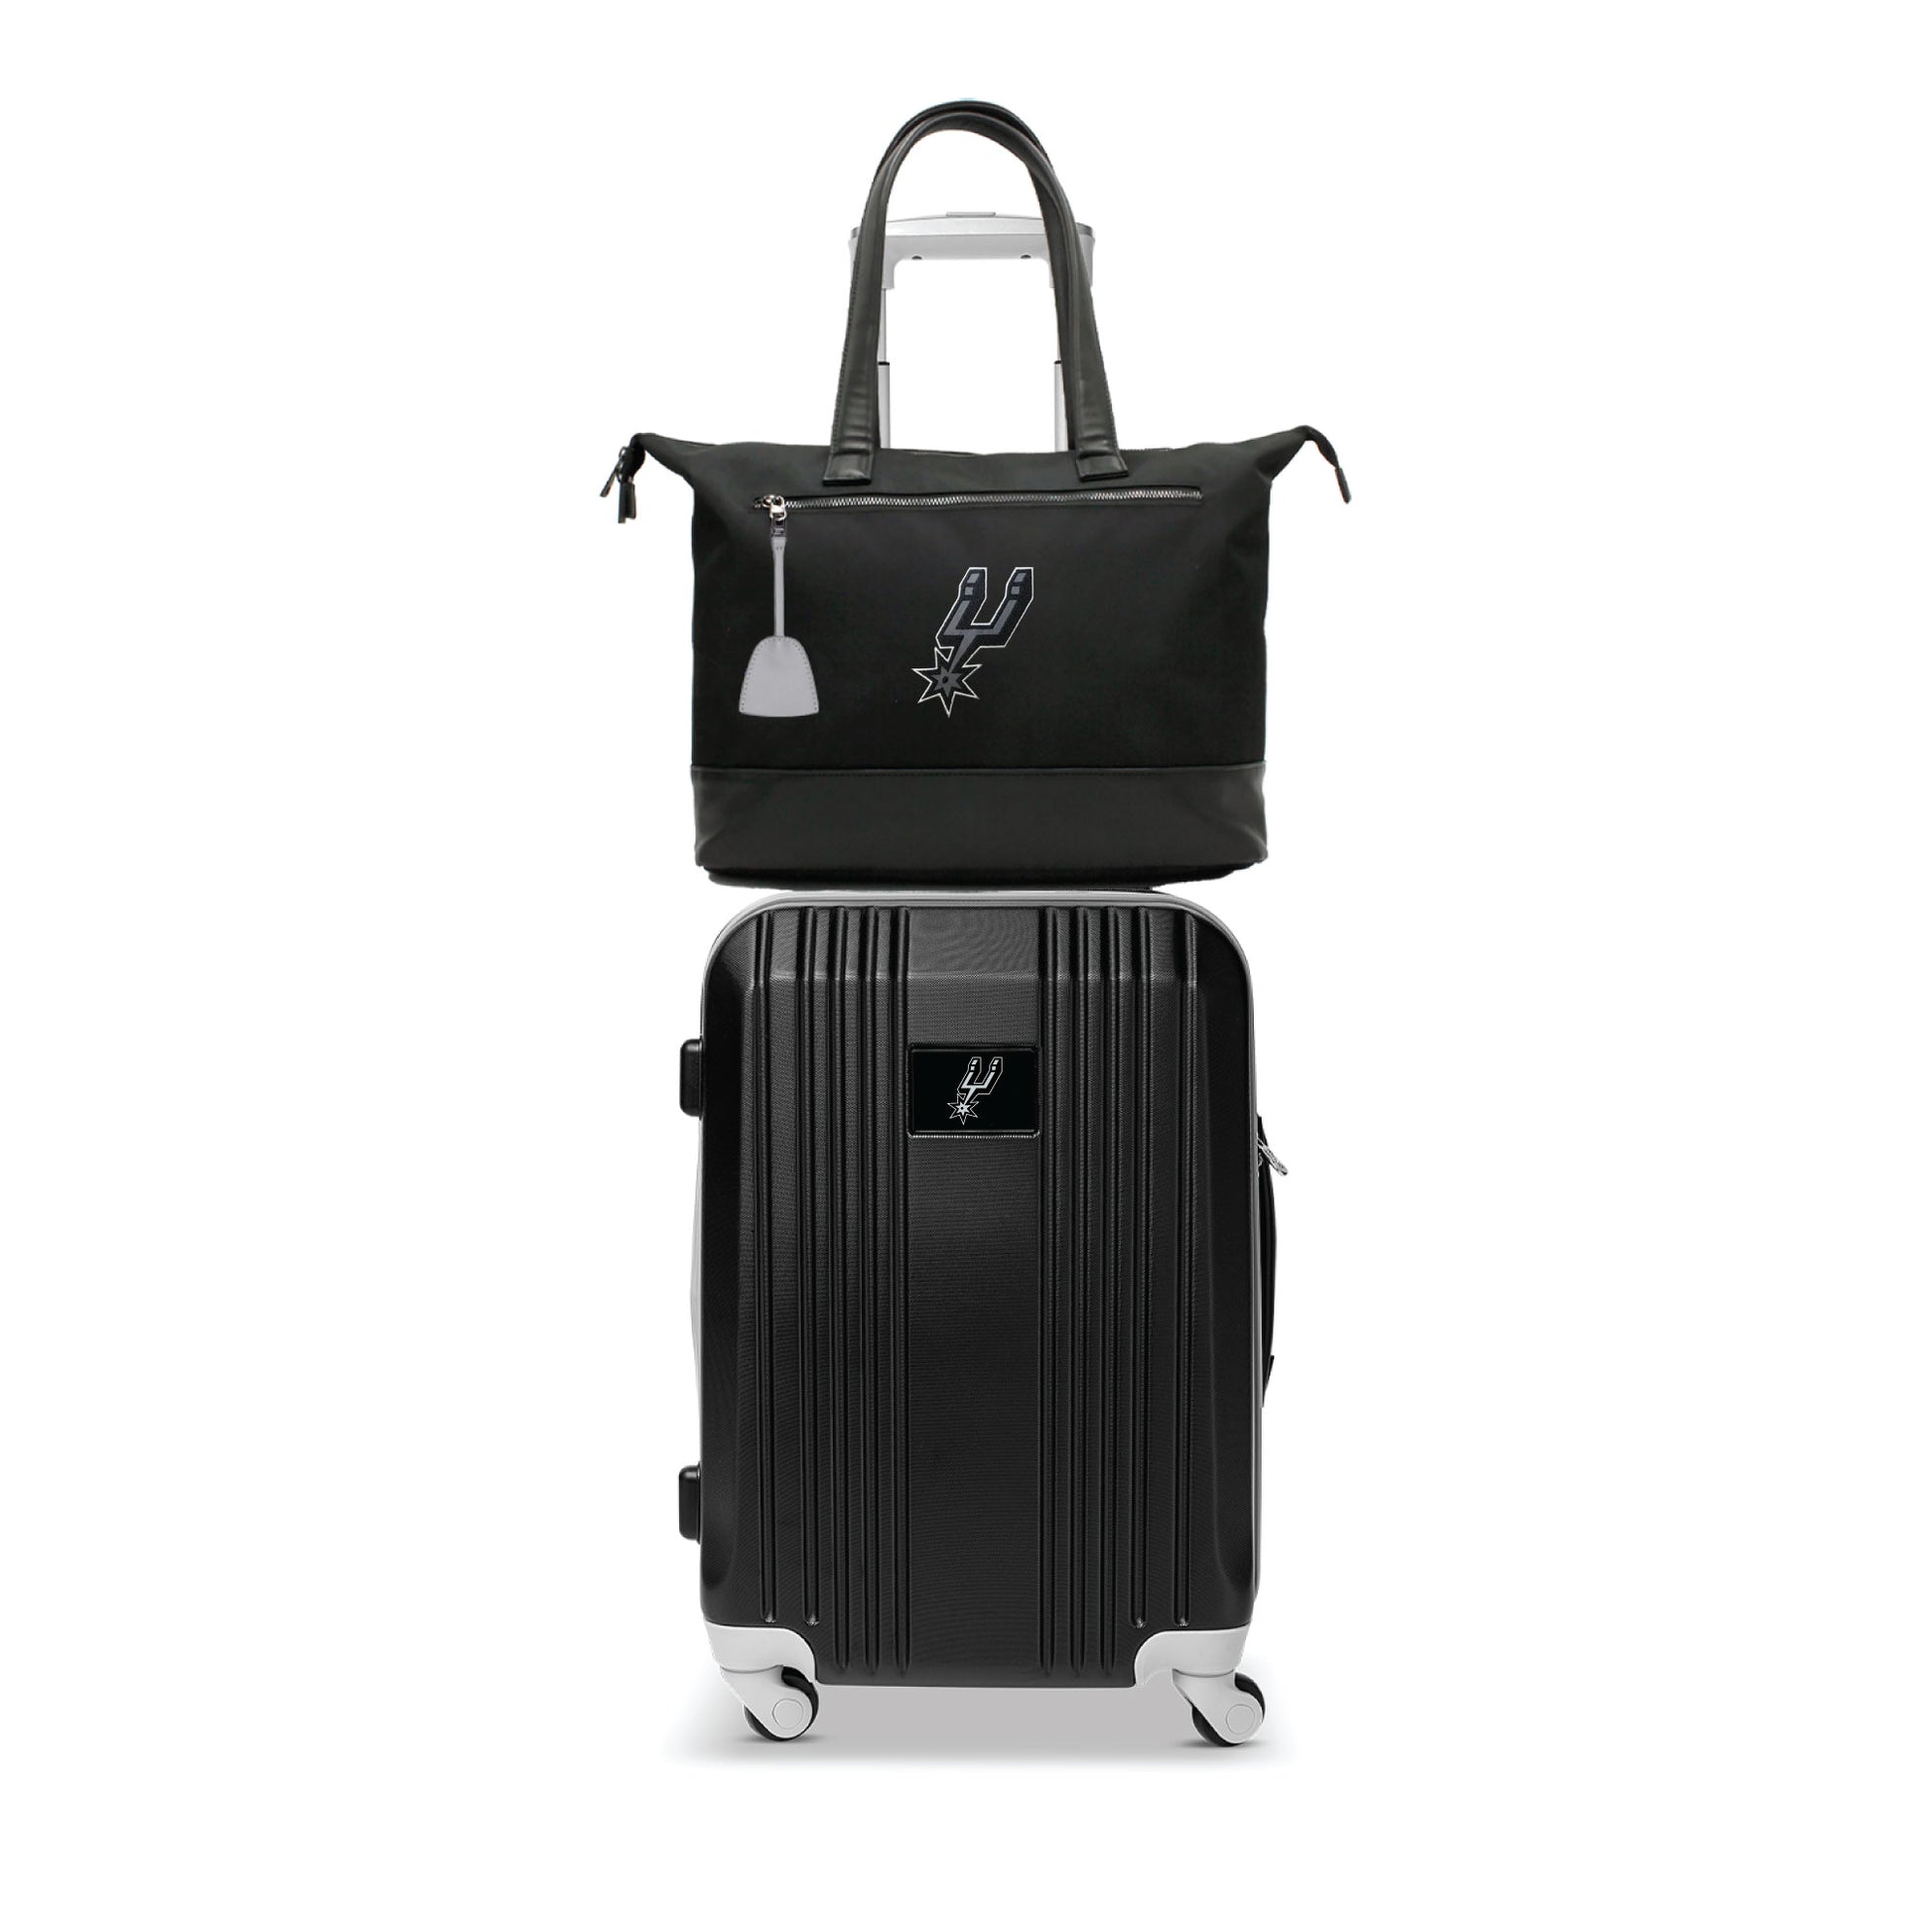 San Antonio Spurs Premium Laptop Tote Bag and Luggage Set